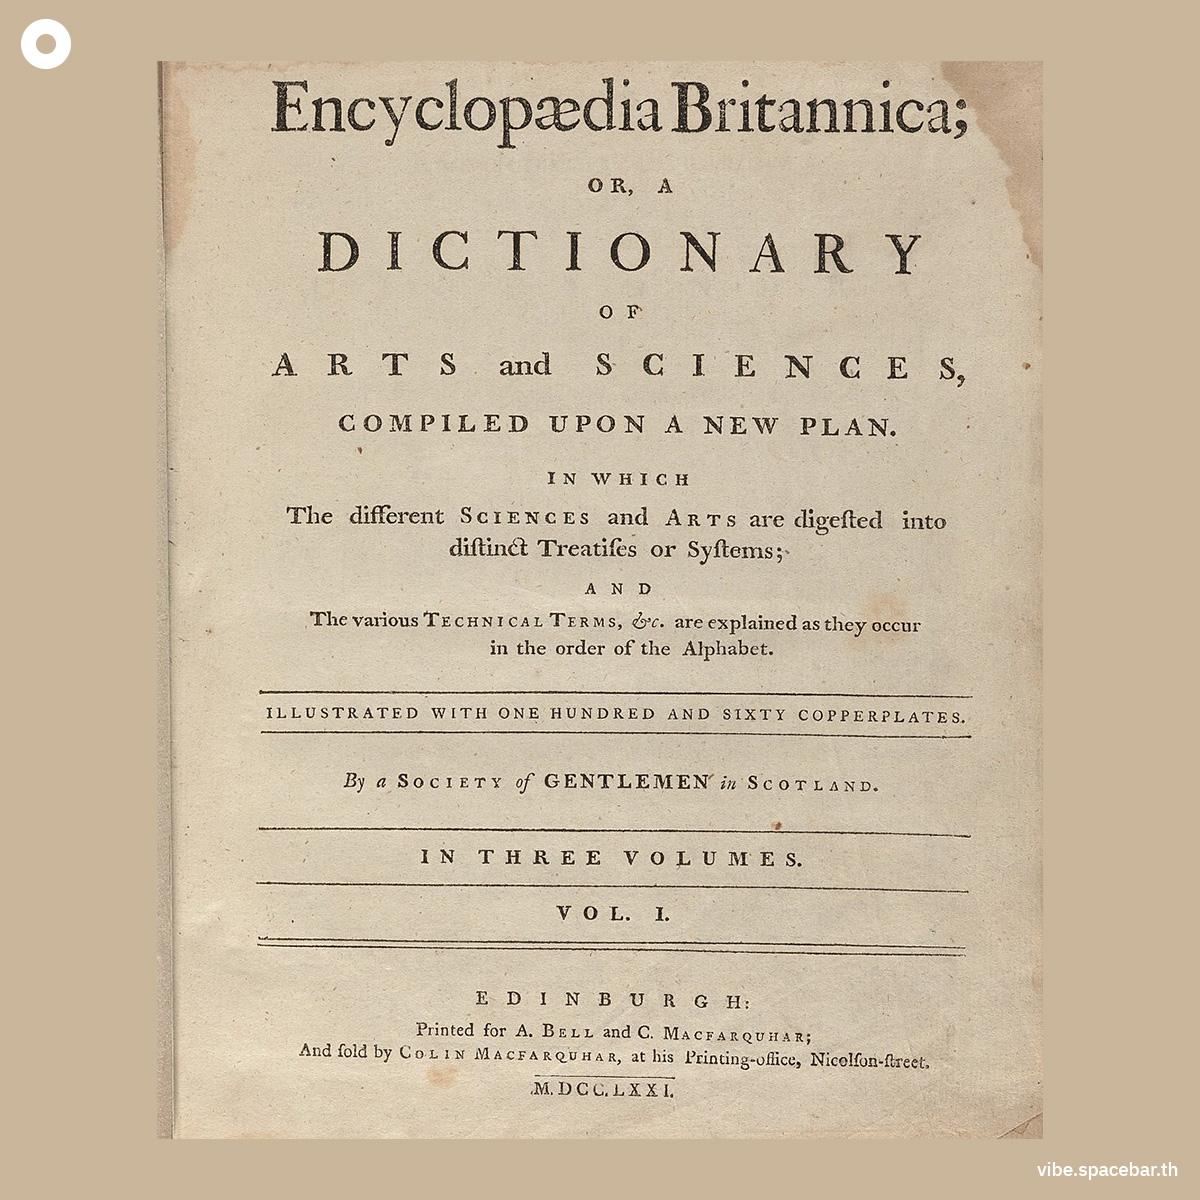 The-First-Encyclopaedia-Britannica-Was-Published-SPACEBAR-Photo_SQ02.jpg